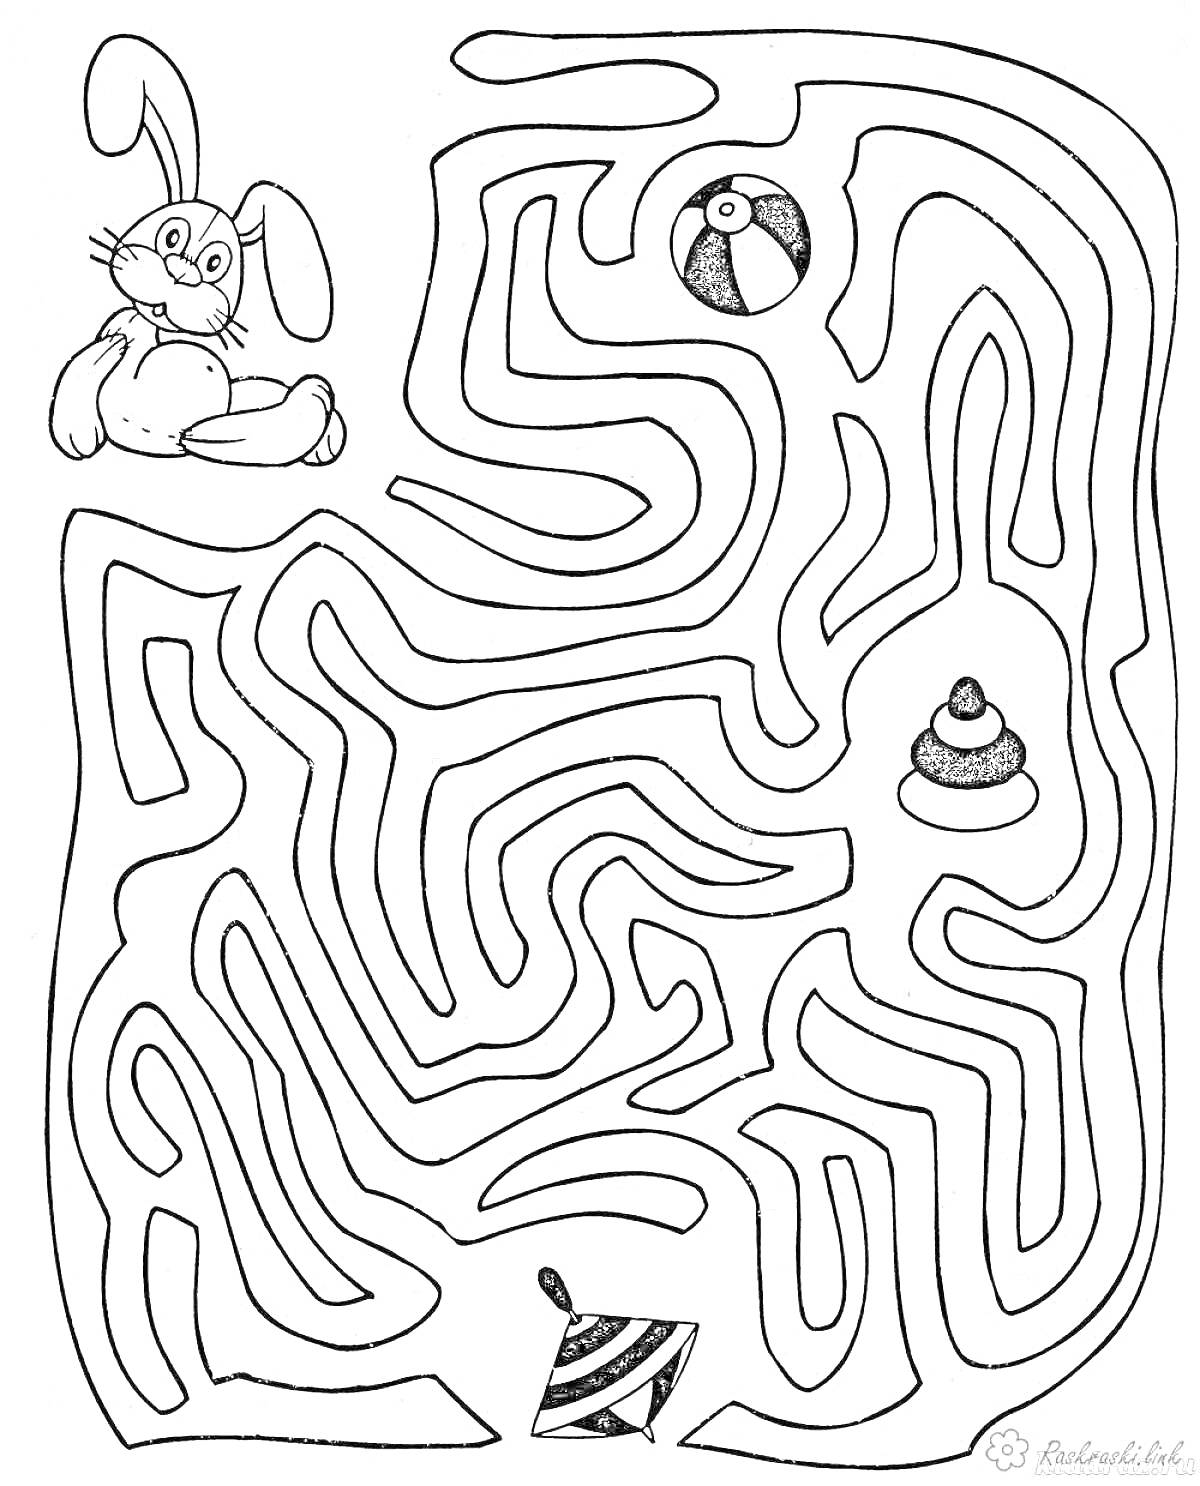 На раскраске изображено: Лабиринт, Заяц, Волчок, Игра, Головоломка, Для детей, Мячи